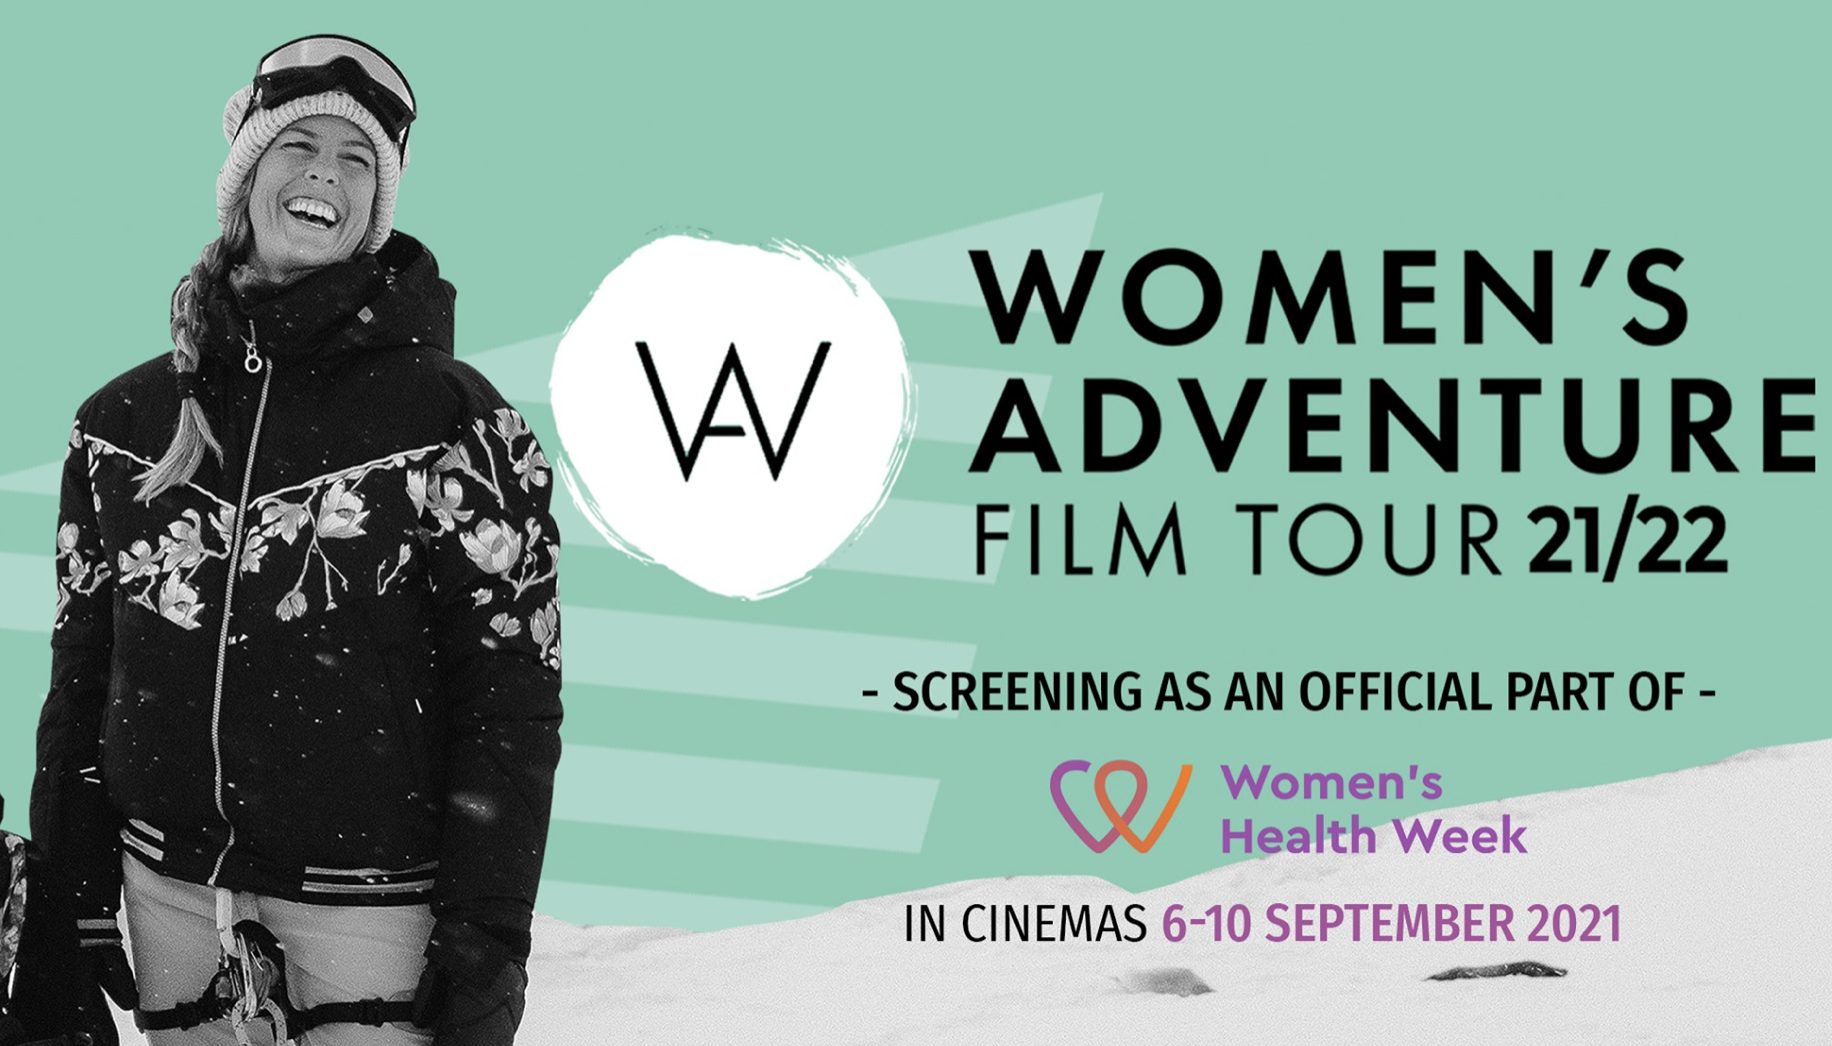 Women’s Adventure Film Tour